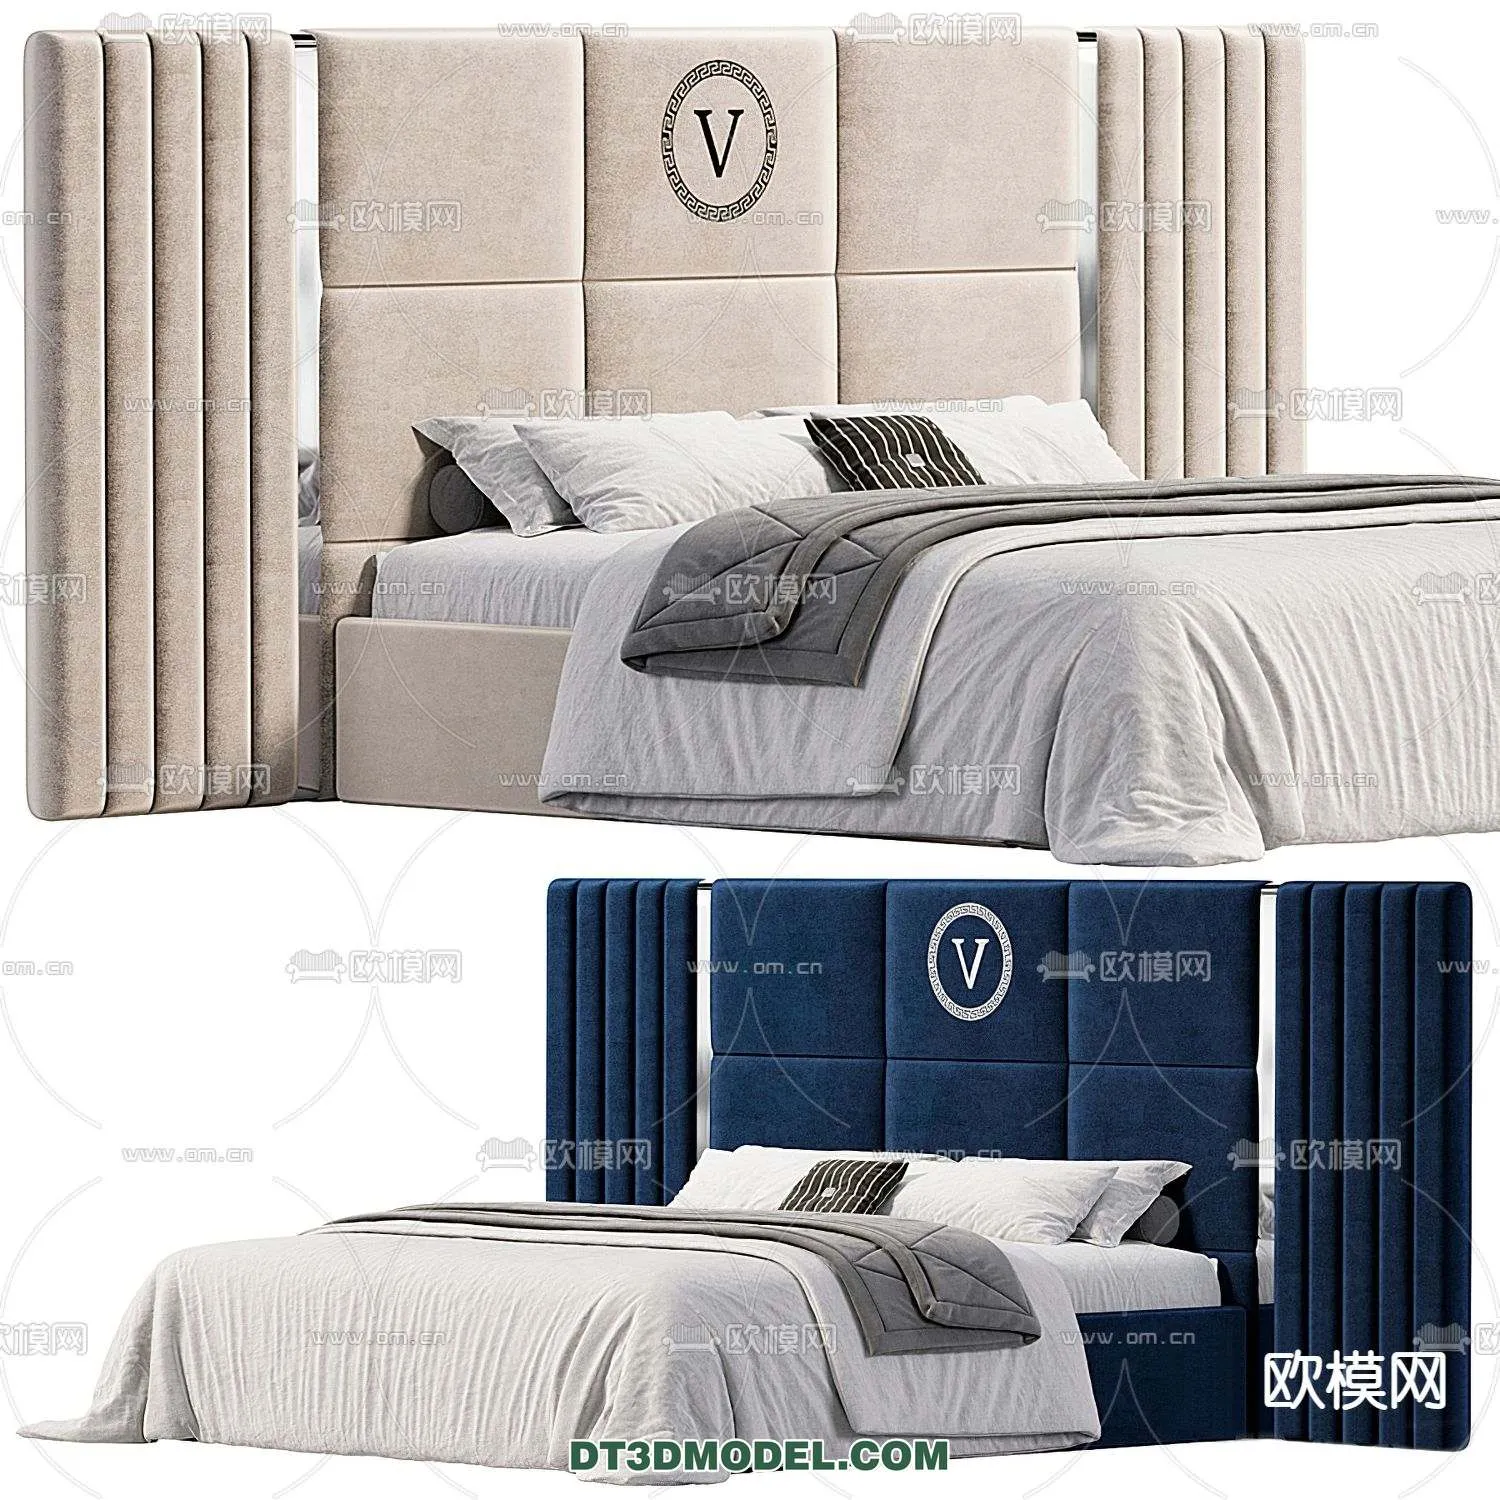 Double Bed 3D Models – 0073